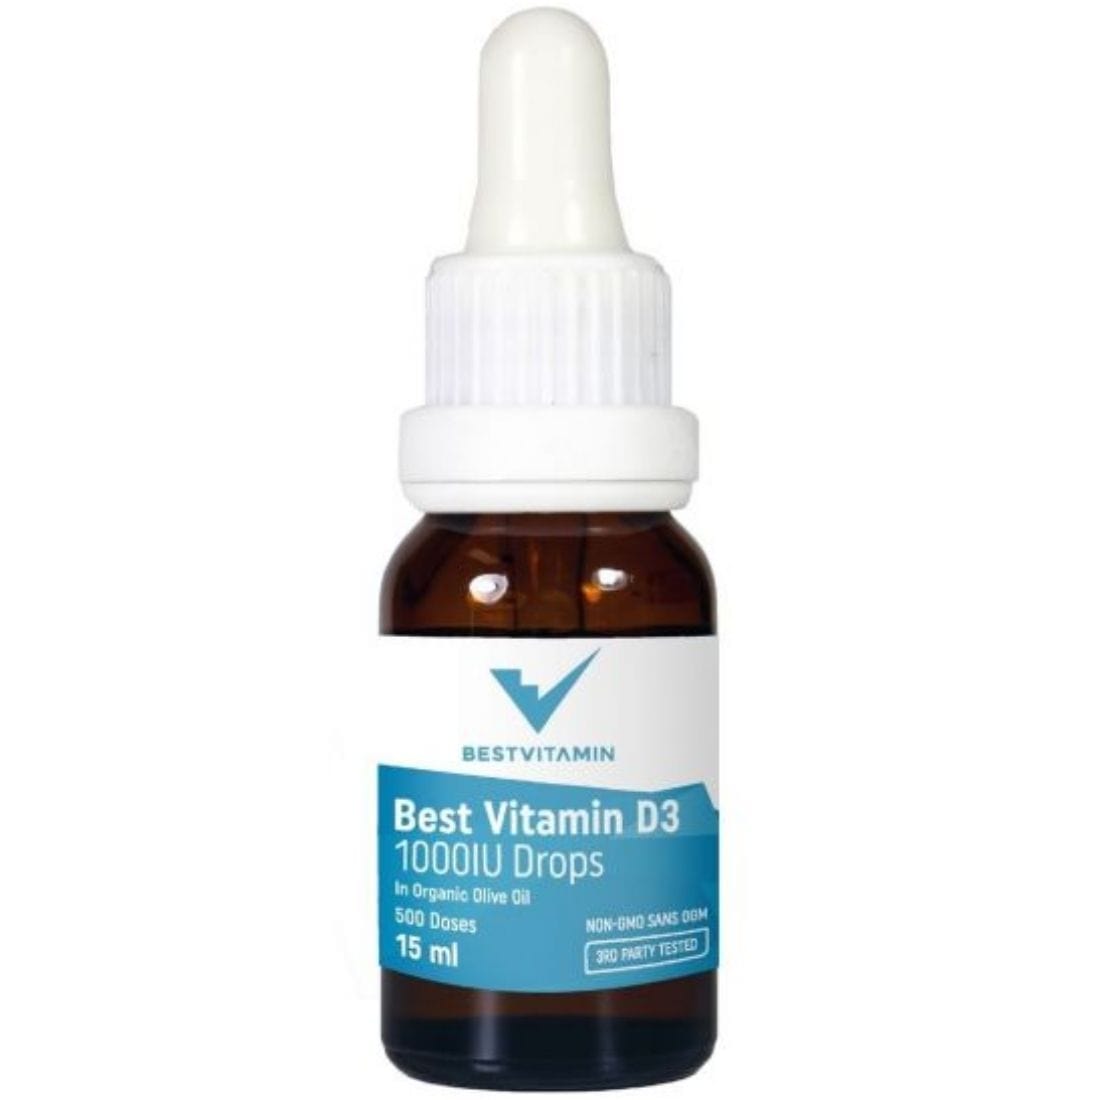 BestVitamin Best Liquid Vitamin D3 Drops 1000IU with Organic Olive Oil, 500 Servings, 15ml